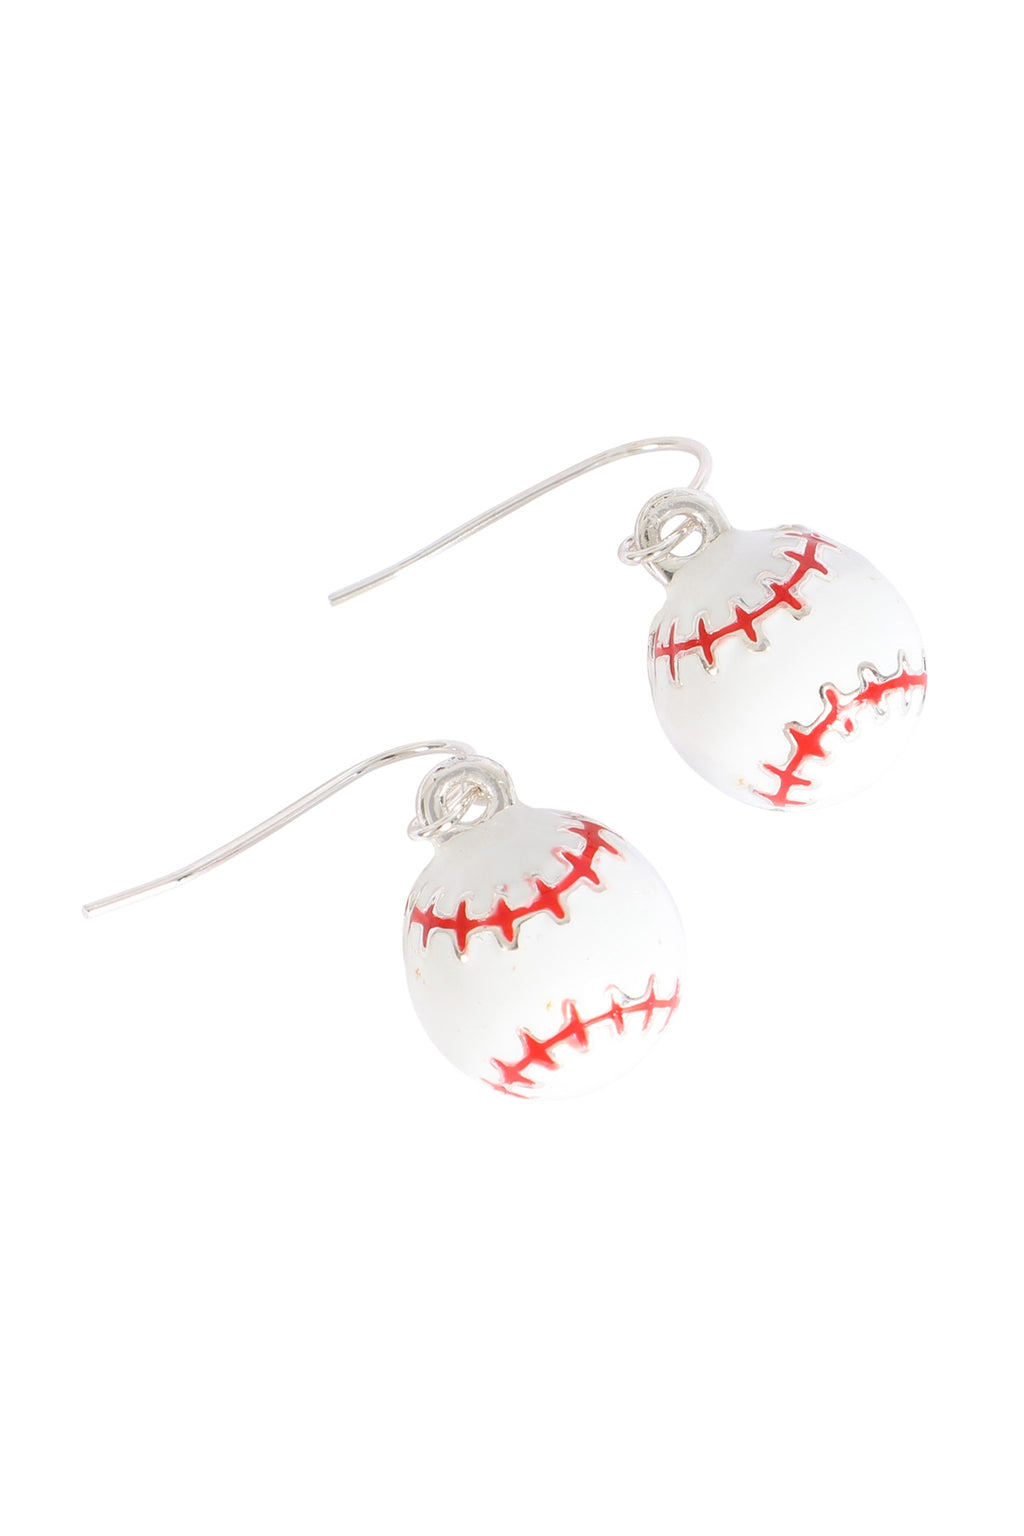 Baseball Epoxy Sports Dangle Hook Earrings Silver - Pack of 6